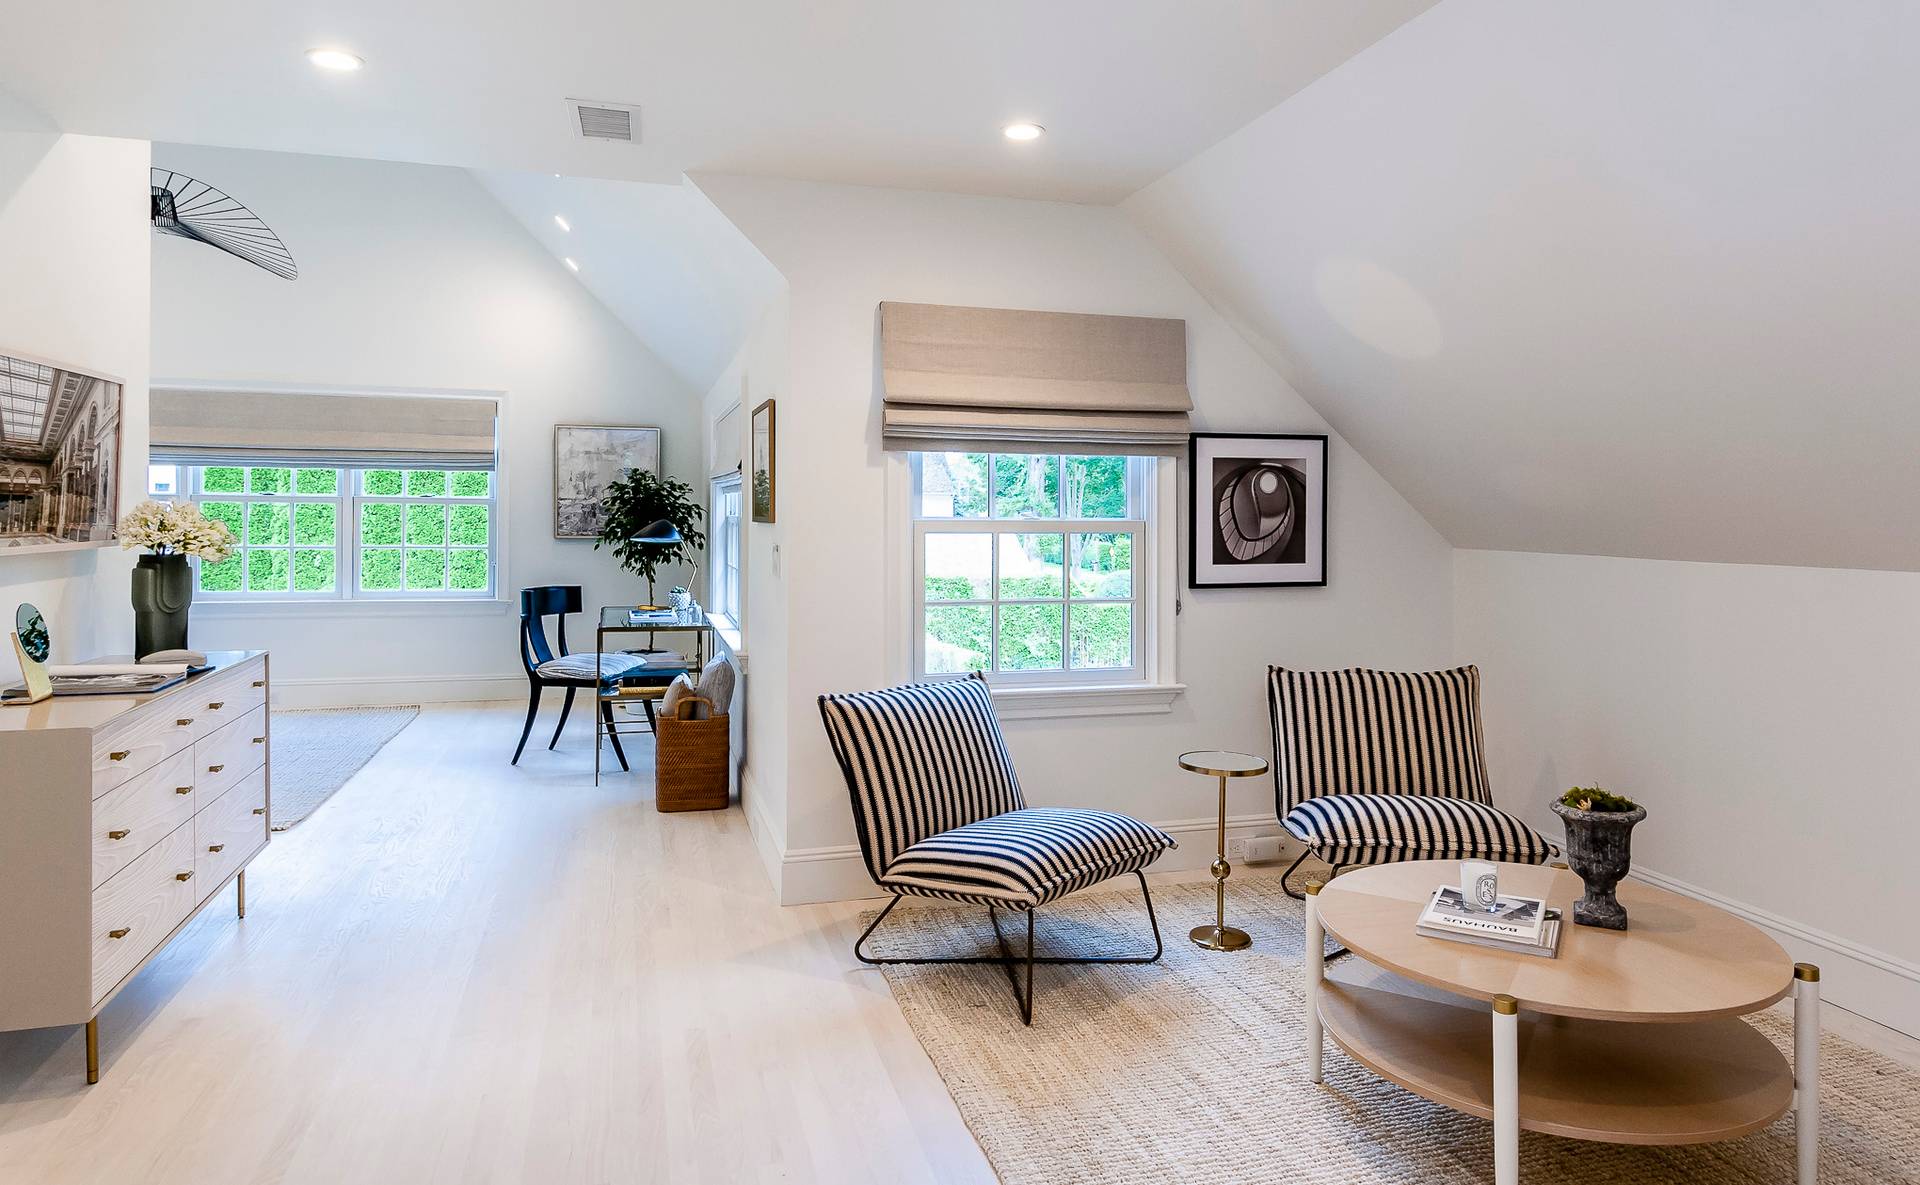 Designer's Southampton Home - Summer 2019 Rental